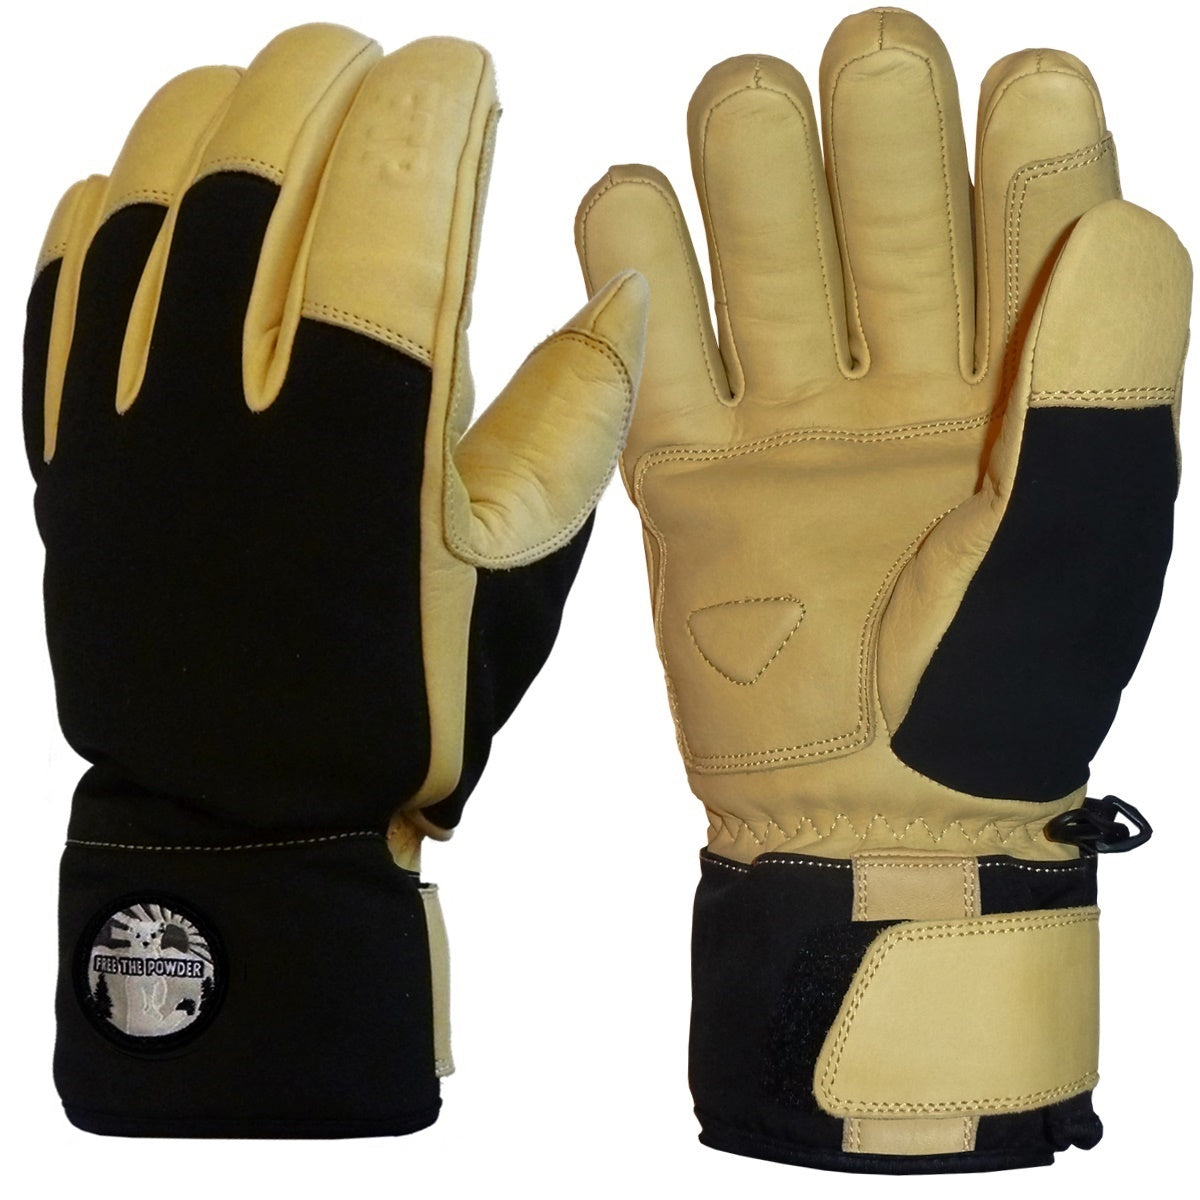 SX Pro Glove by Free the Powder